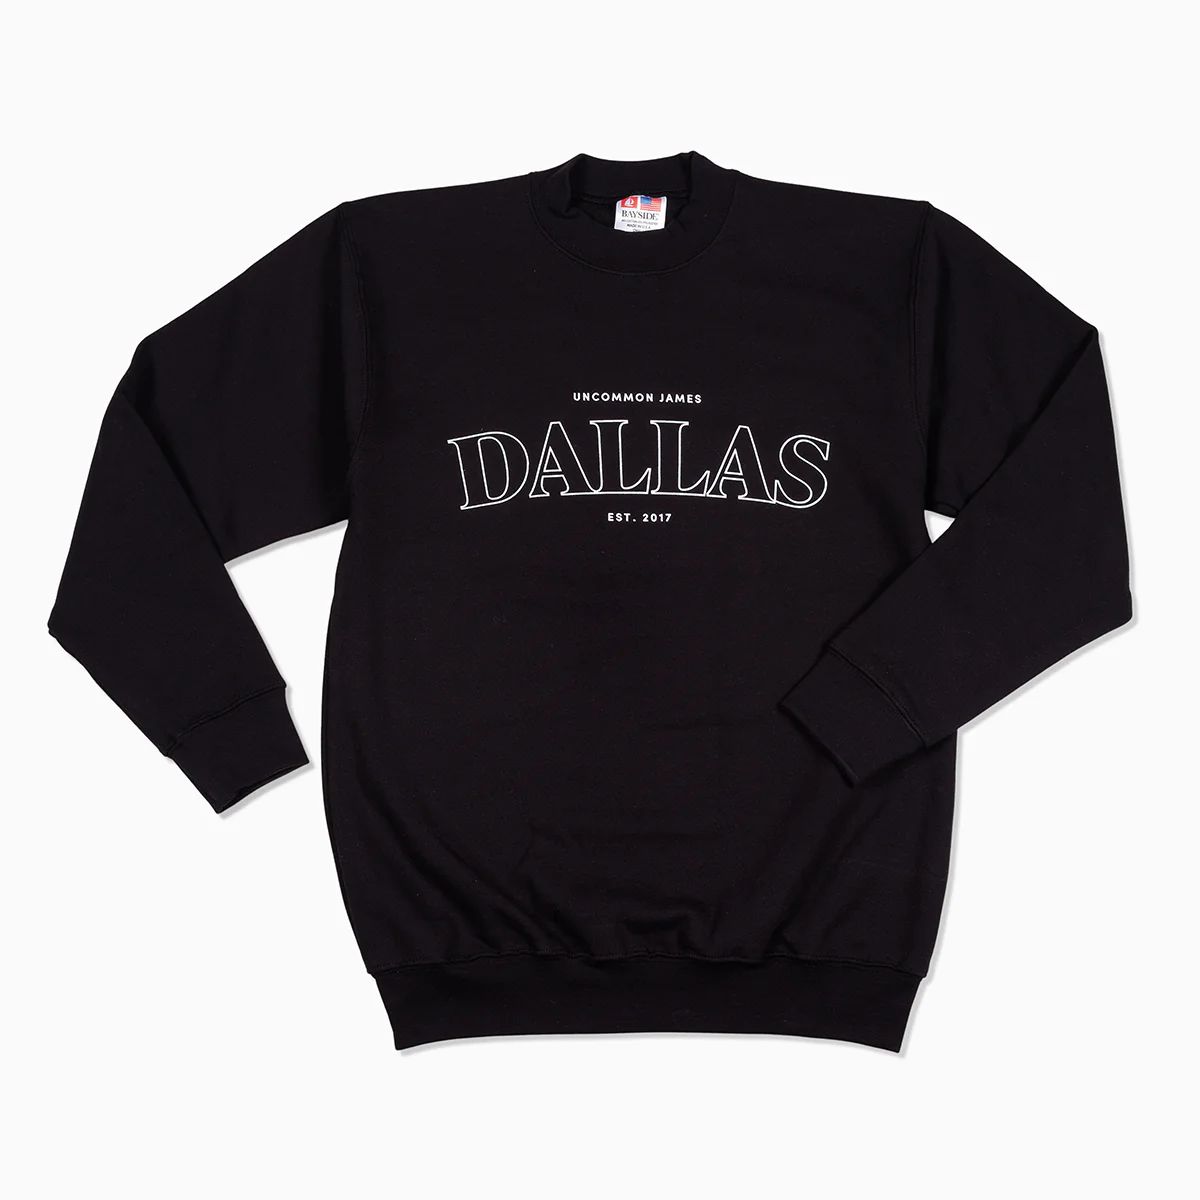 Dallas Crewneck Sweatshirt in Black and Ash | Uncommon James | Uncommon James